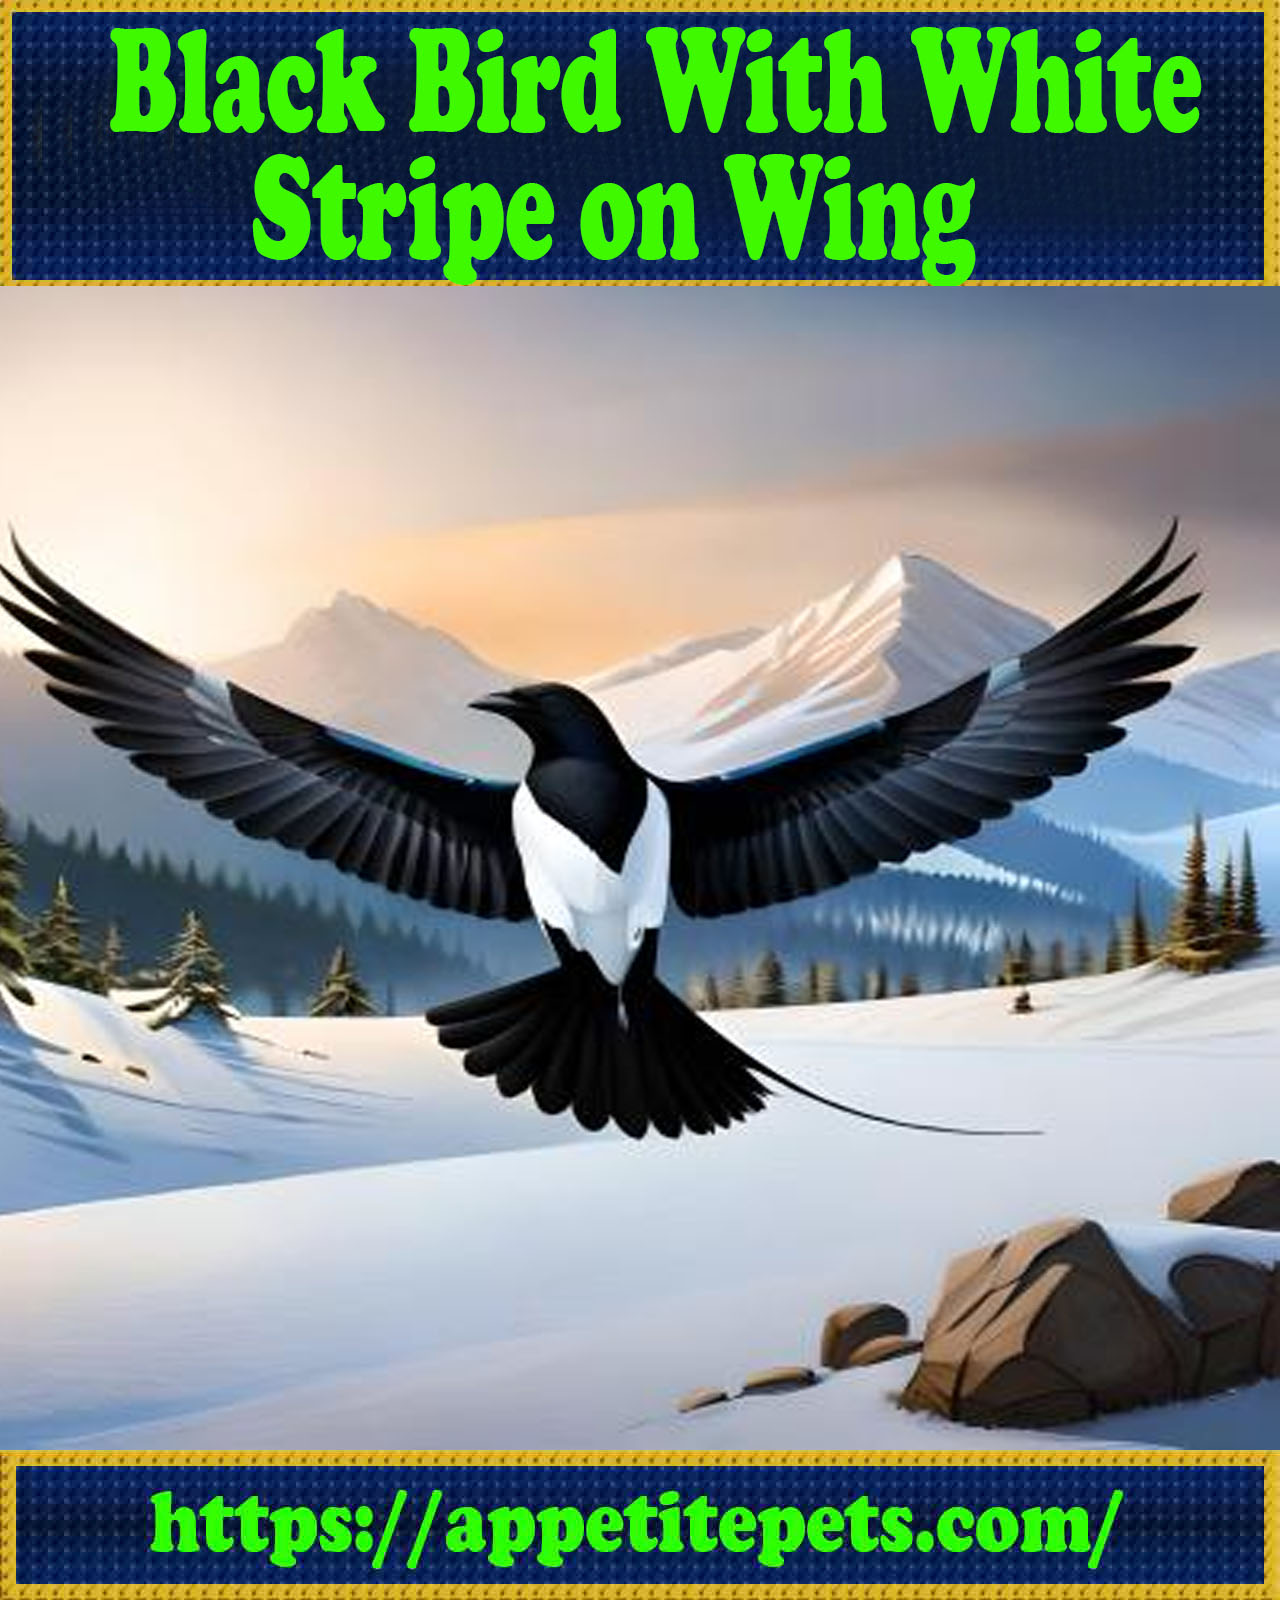 10 Black Bird With White Stripe on Wing